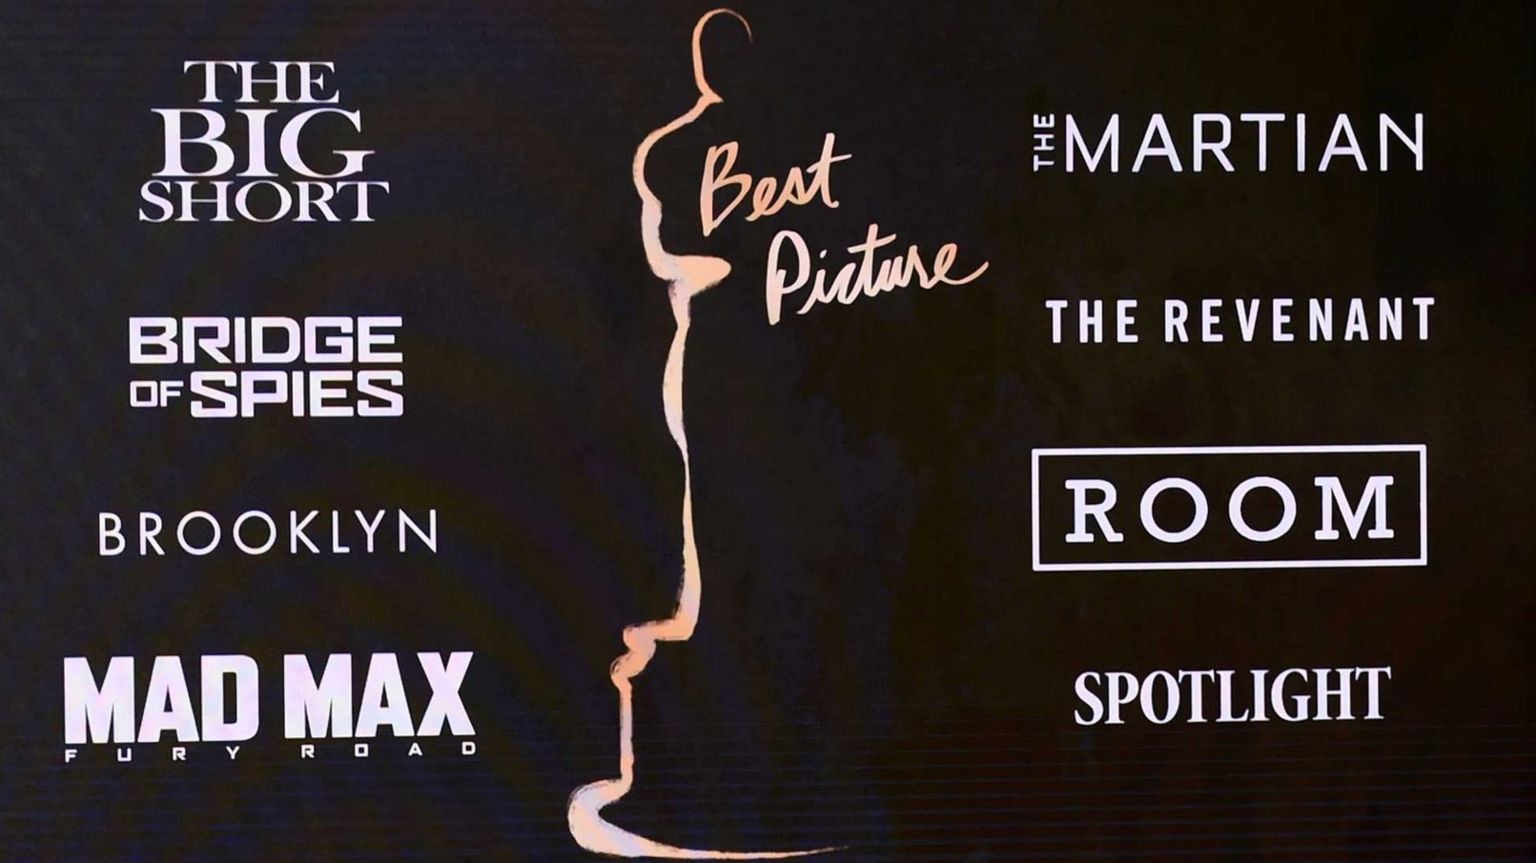 Oscar best picture nominations